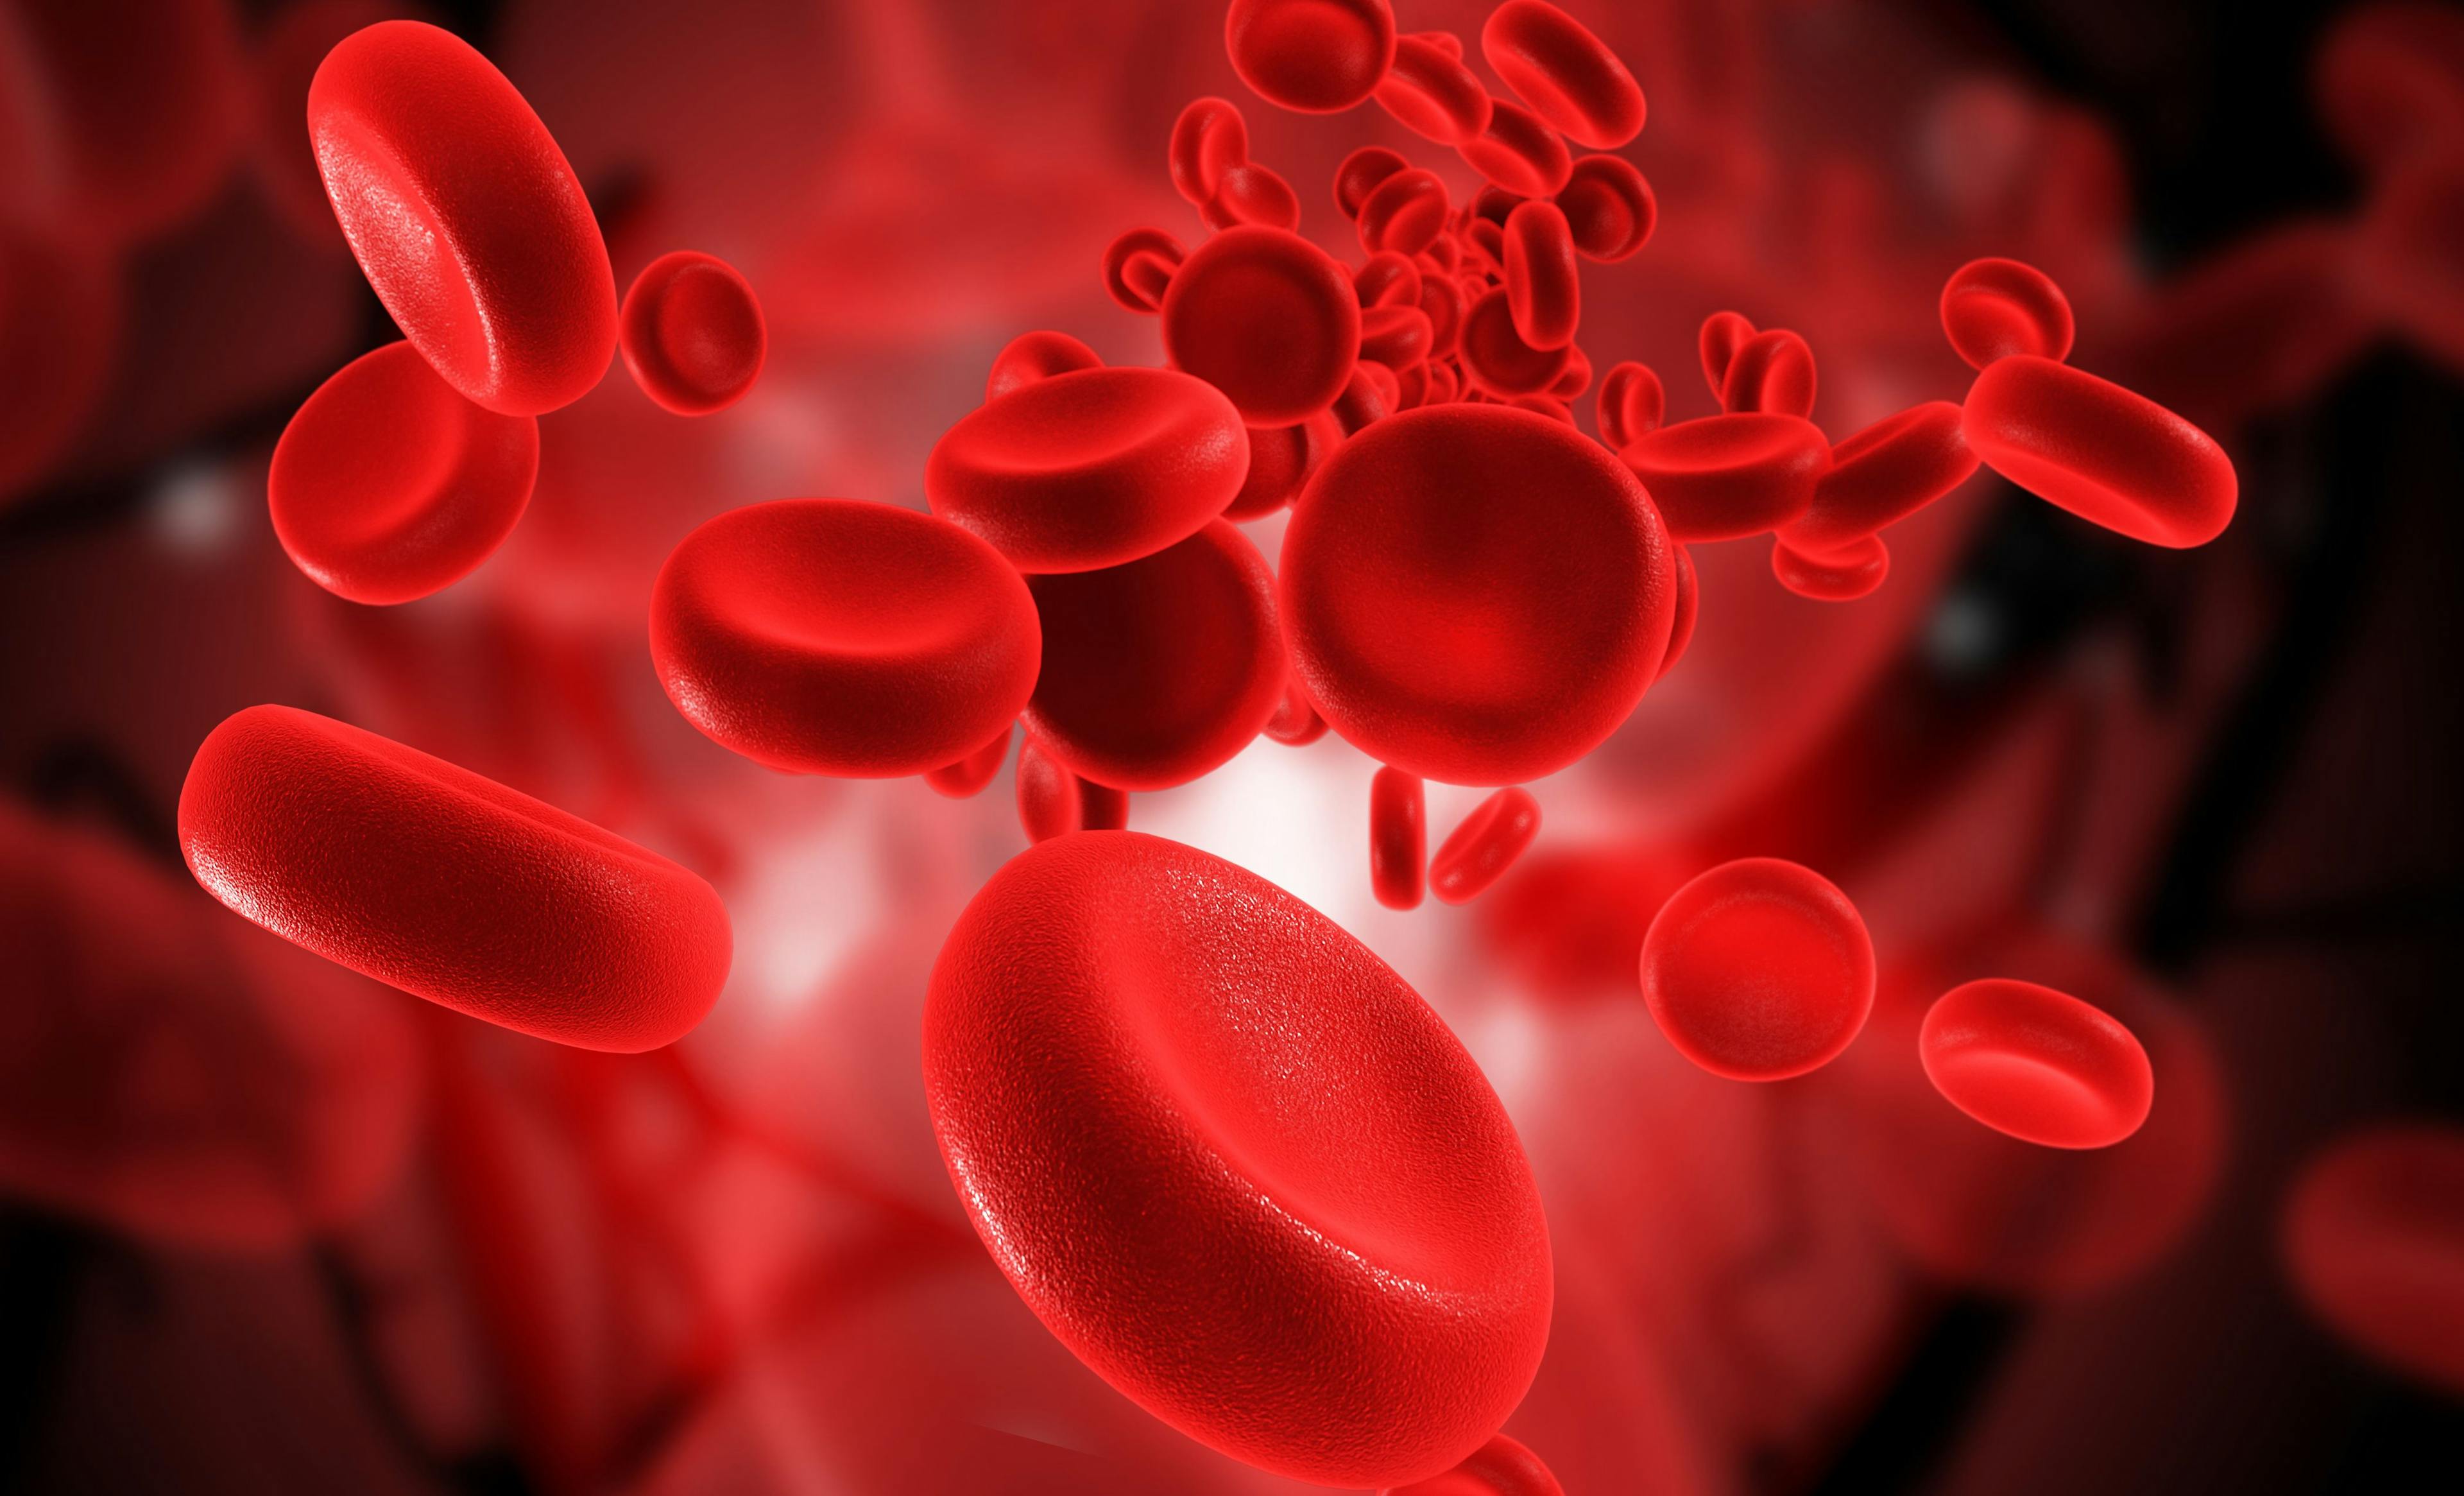 Blood cells | Image credit: abhijith3747 - stock.adobe.com